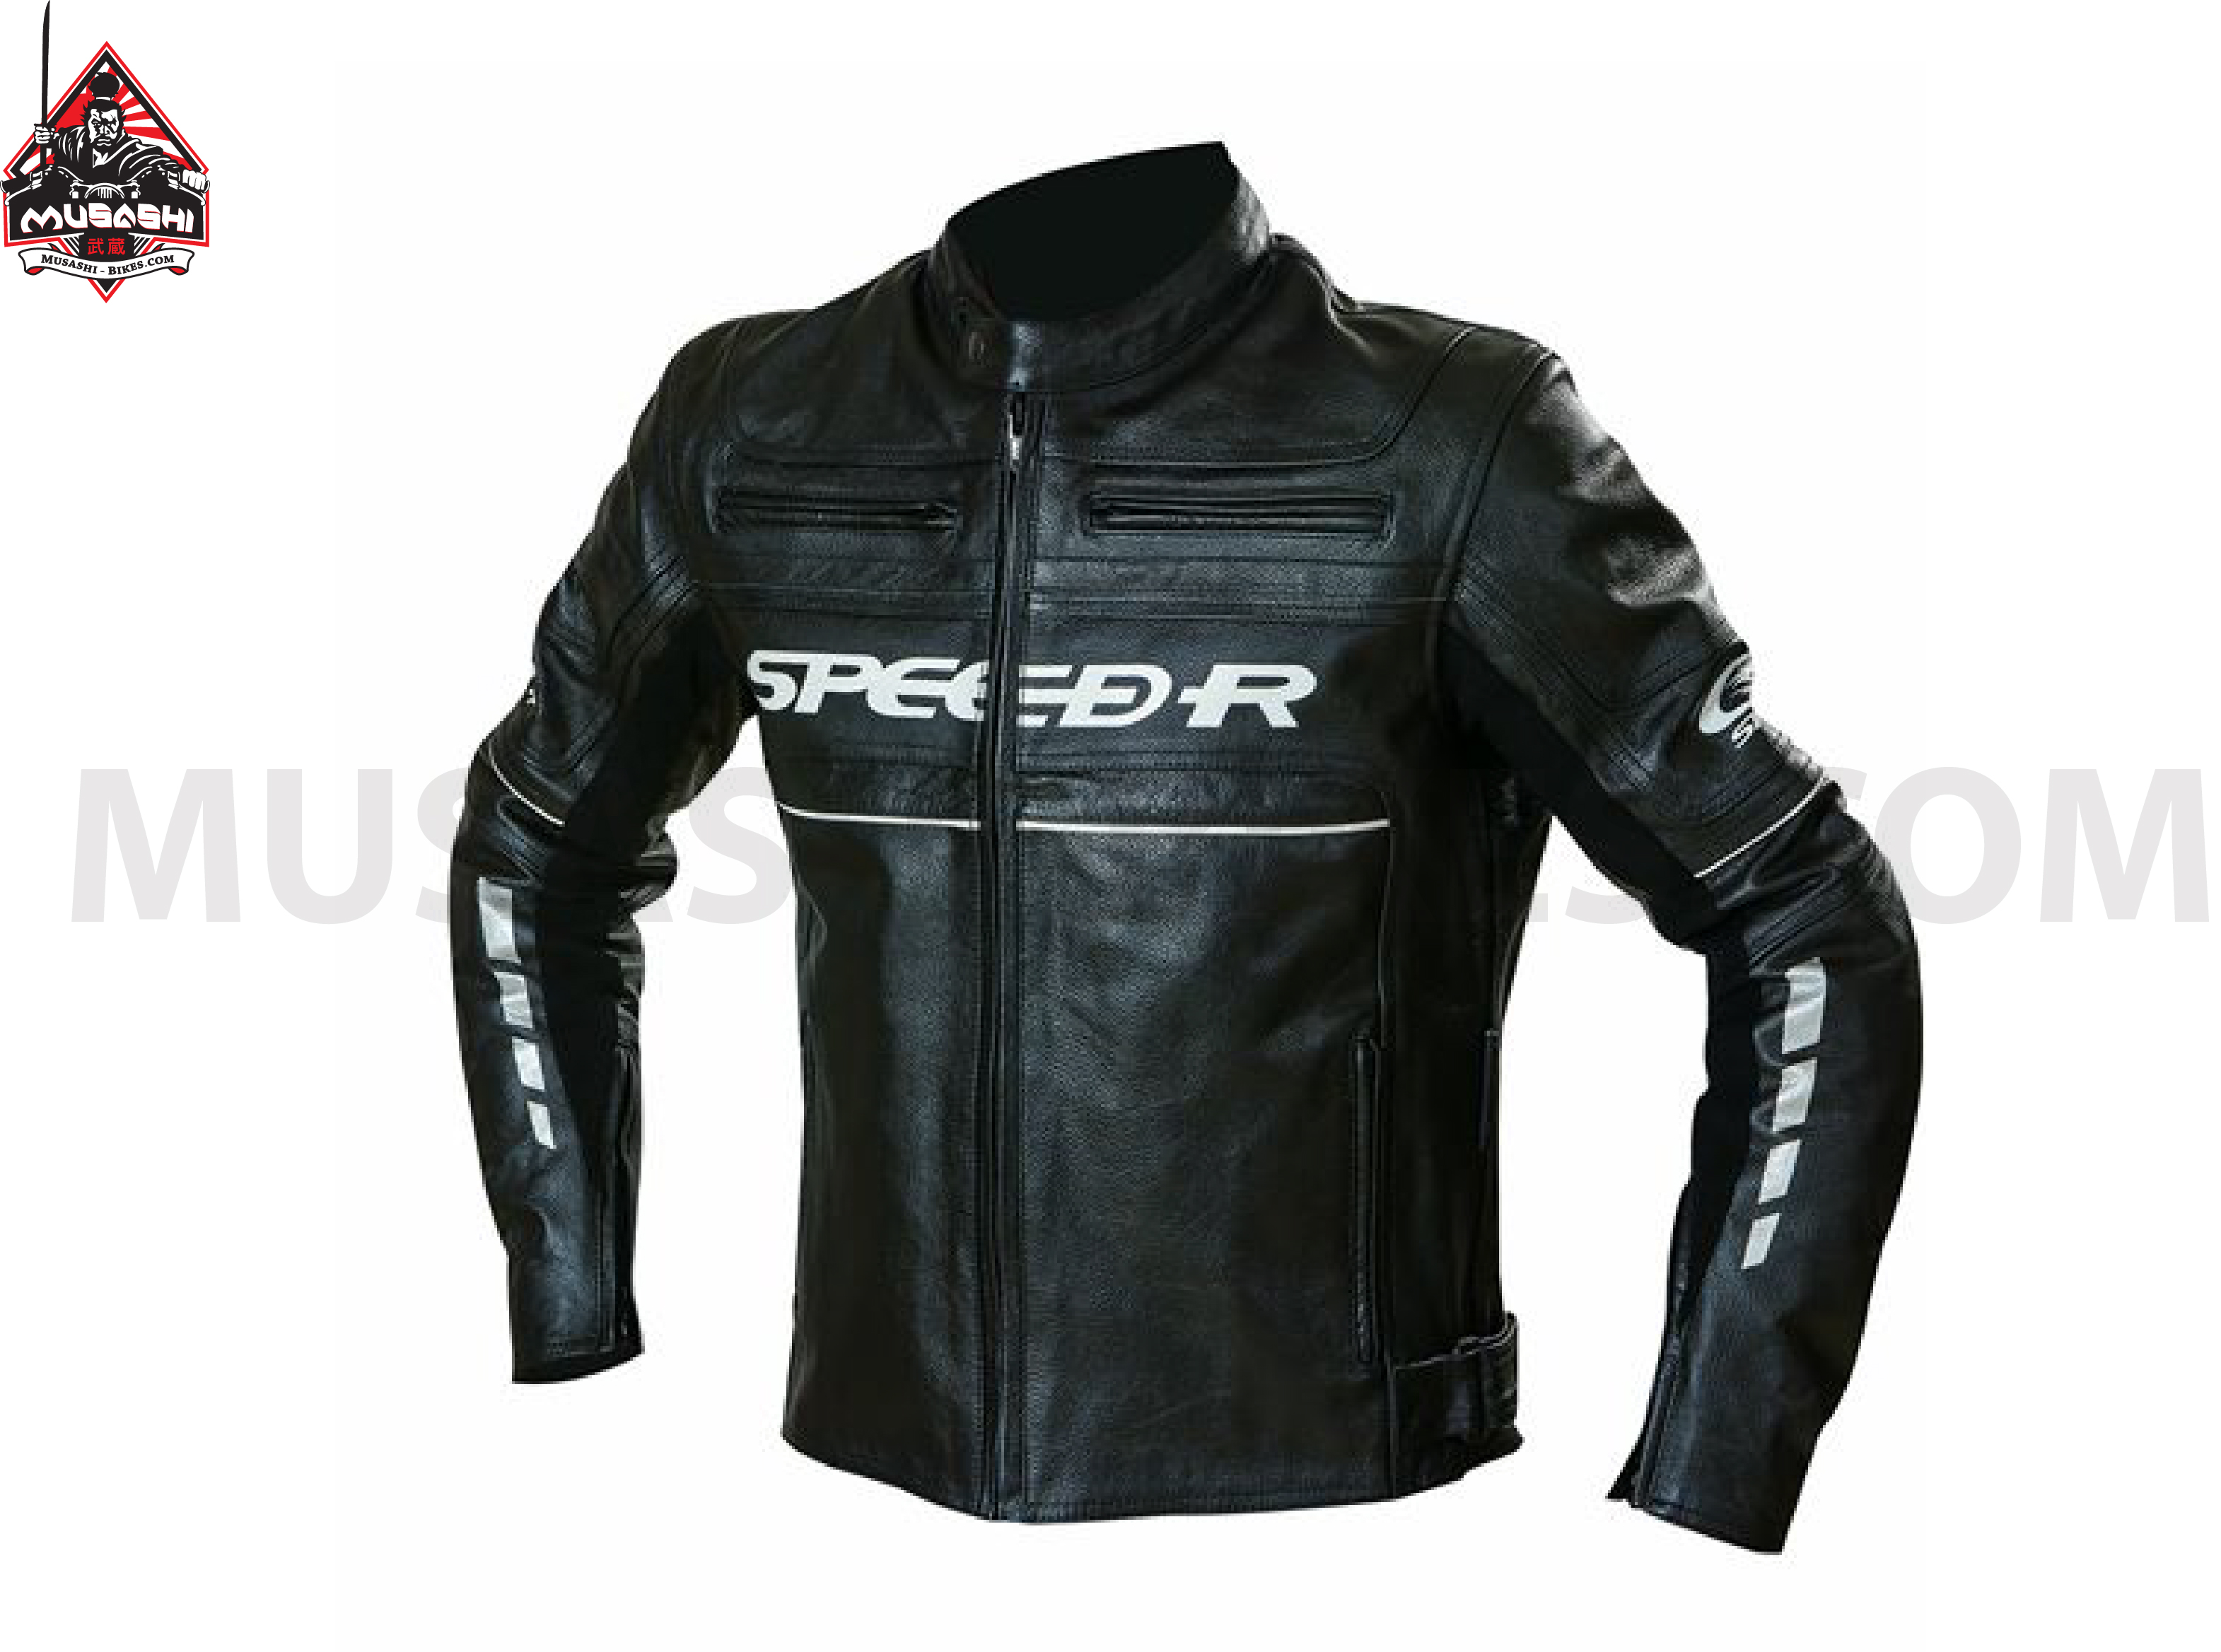 Men's Retro Leather Jacket B001